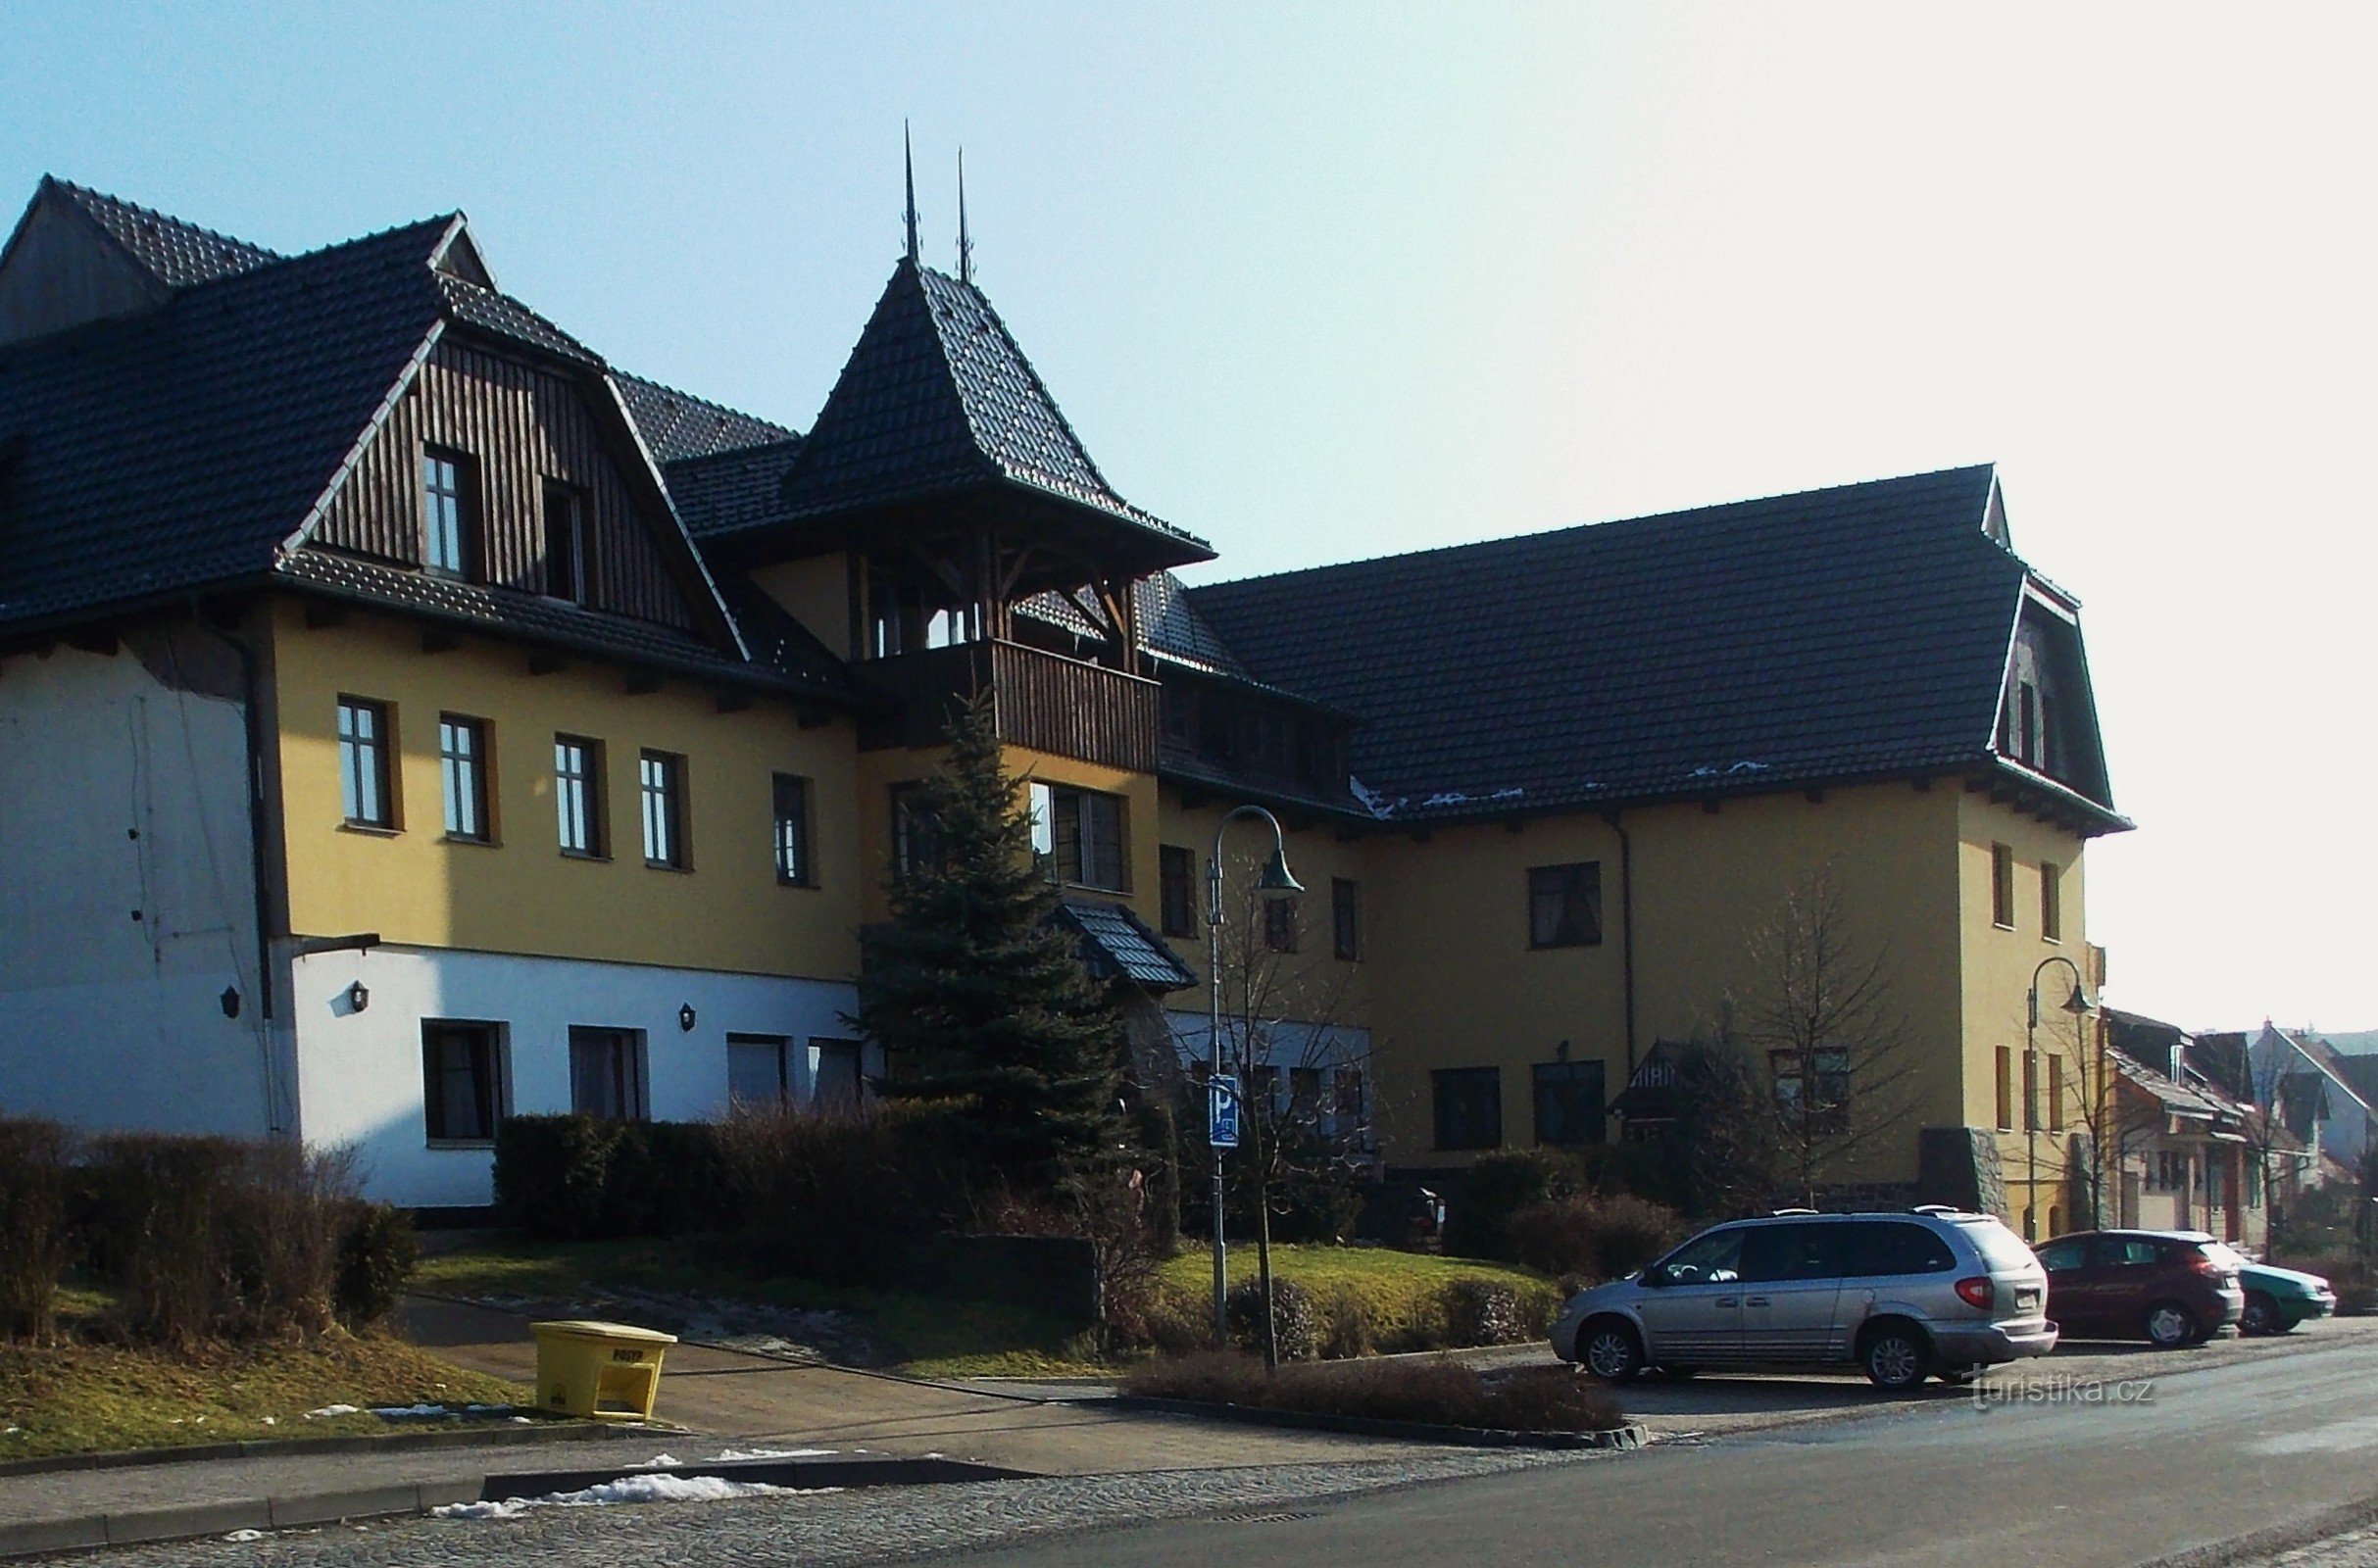 Valašský šenk e Hotel Ogar em Pozlovice perto de Luhačovice